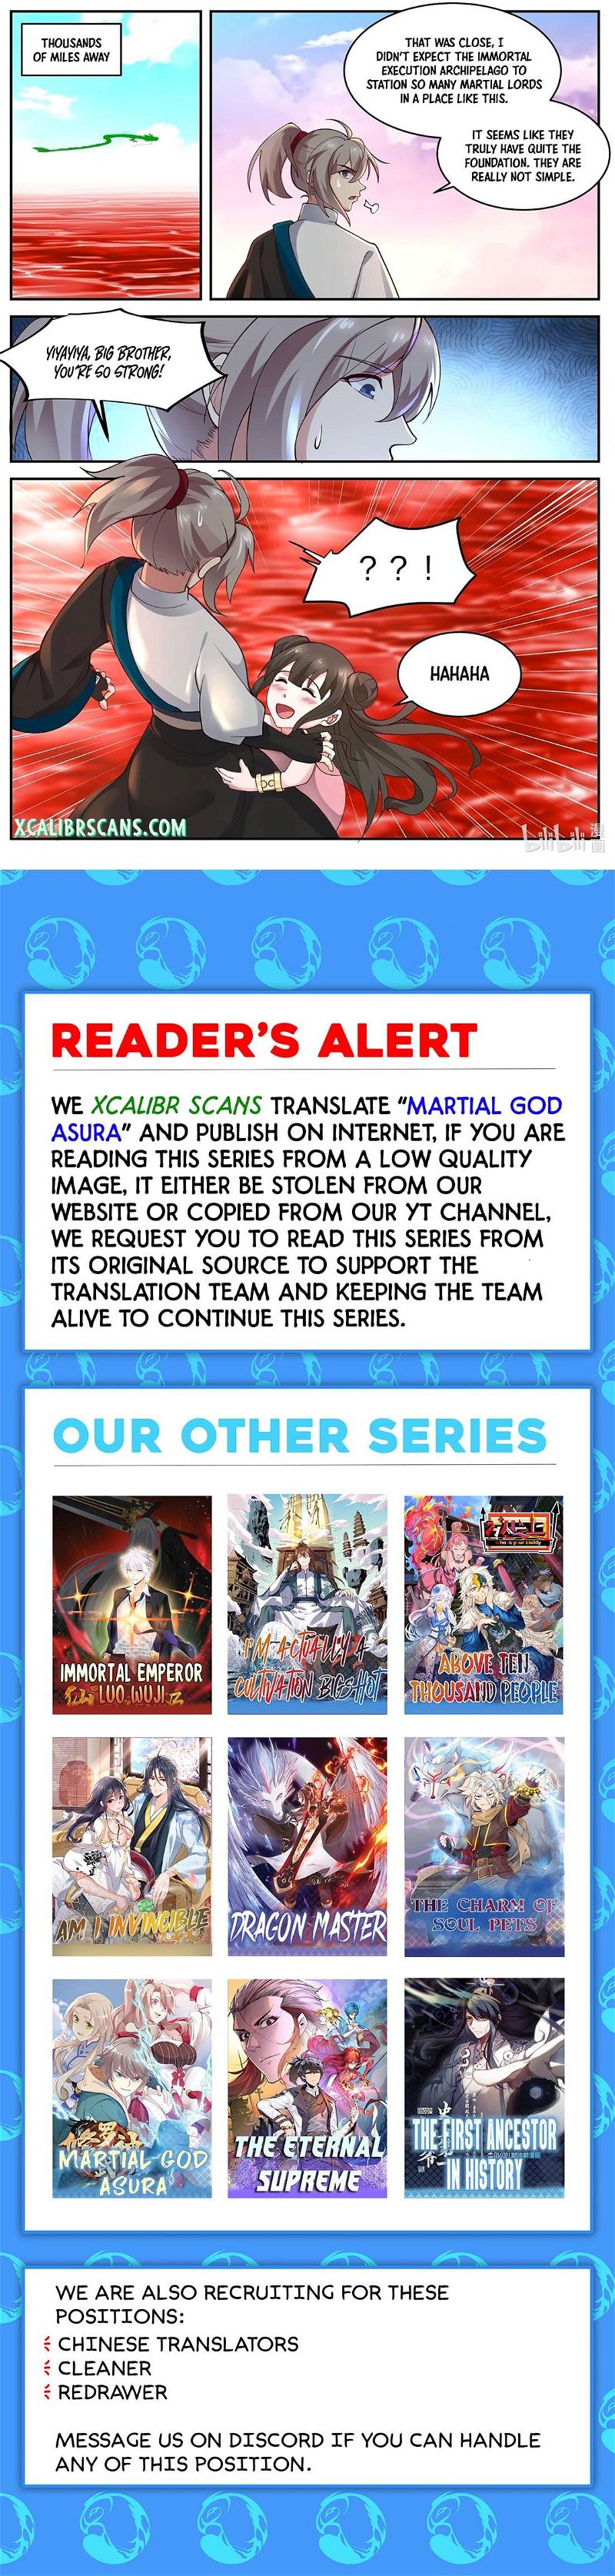 Martial God Asura Chapter 443 page 10